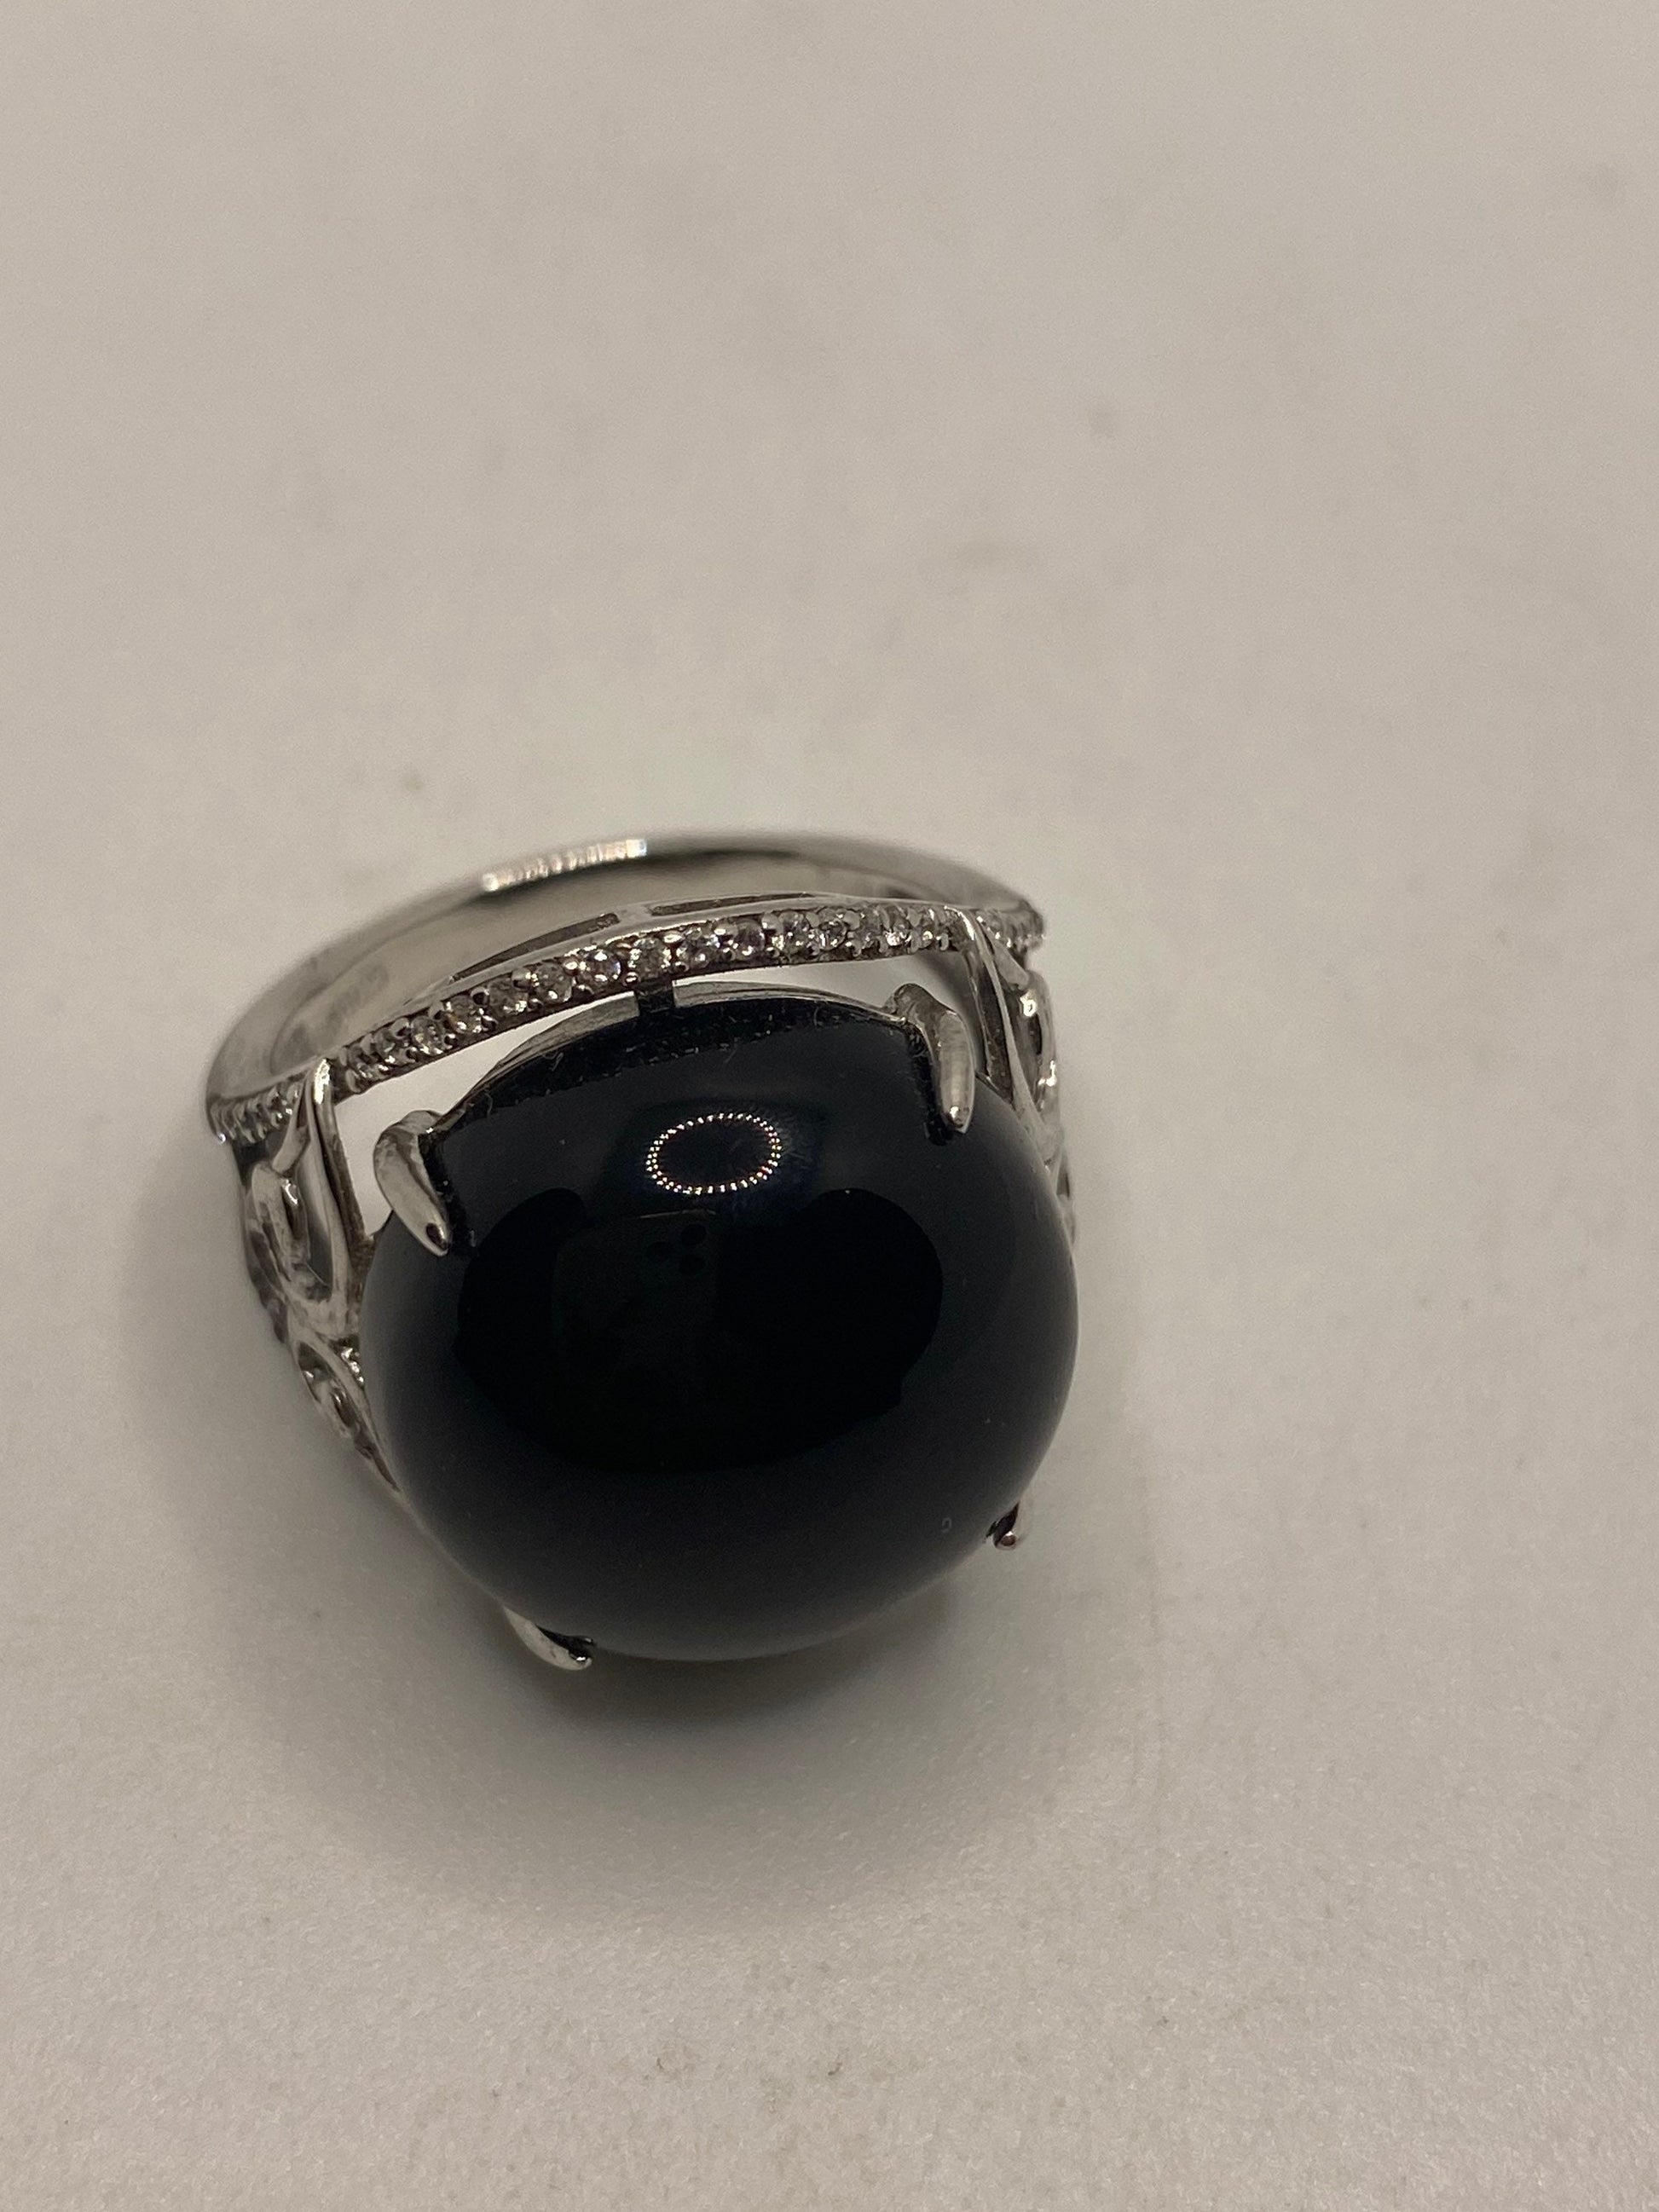 Vintage Black Onyx Ring 925 Sterling Silver